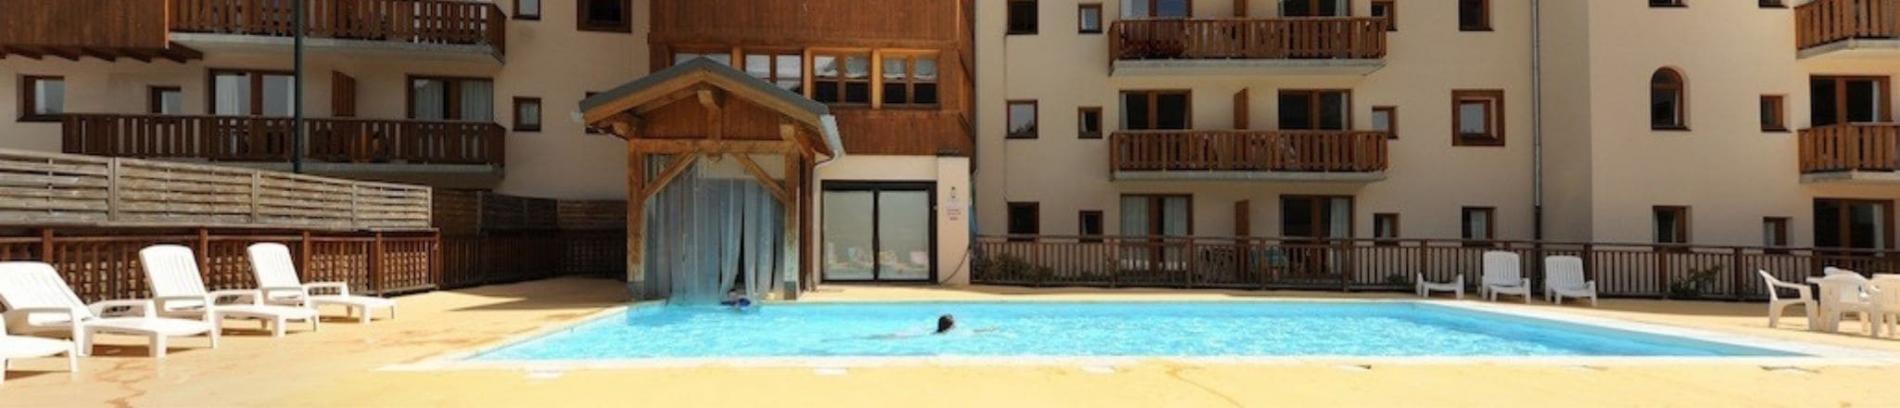 Slide La piscine de la résidence La Turra à Valfréjus